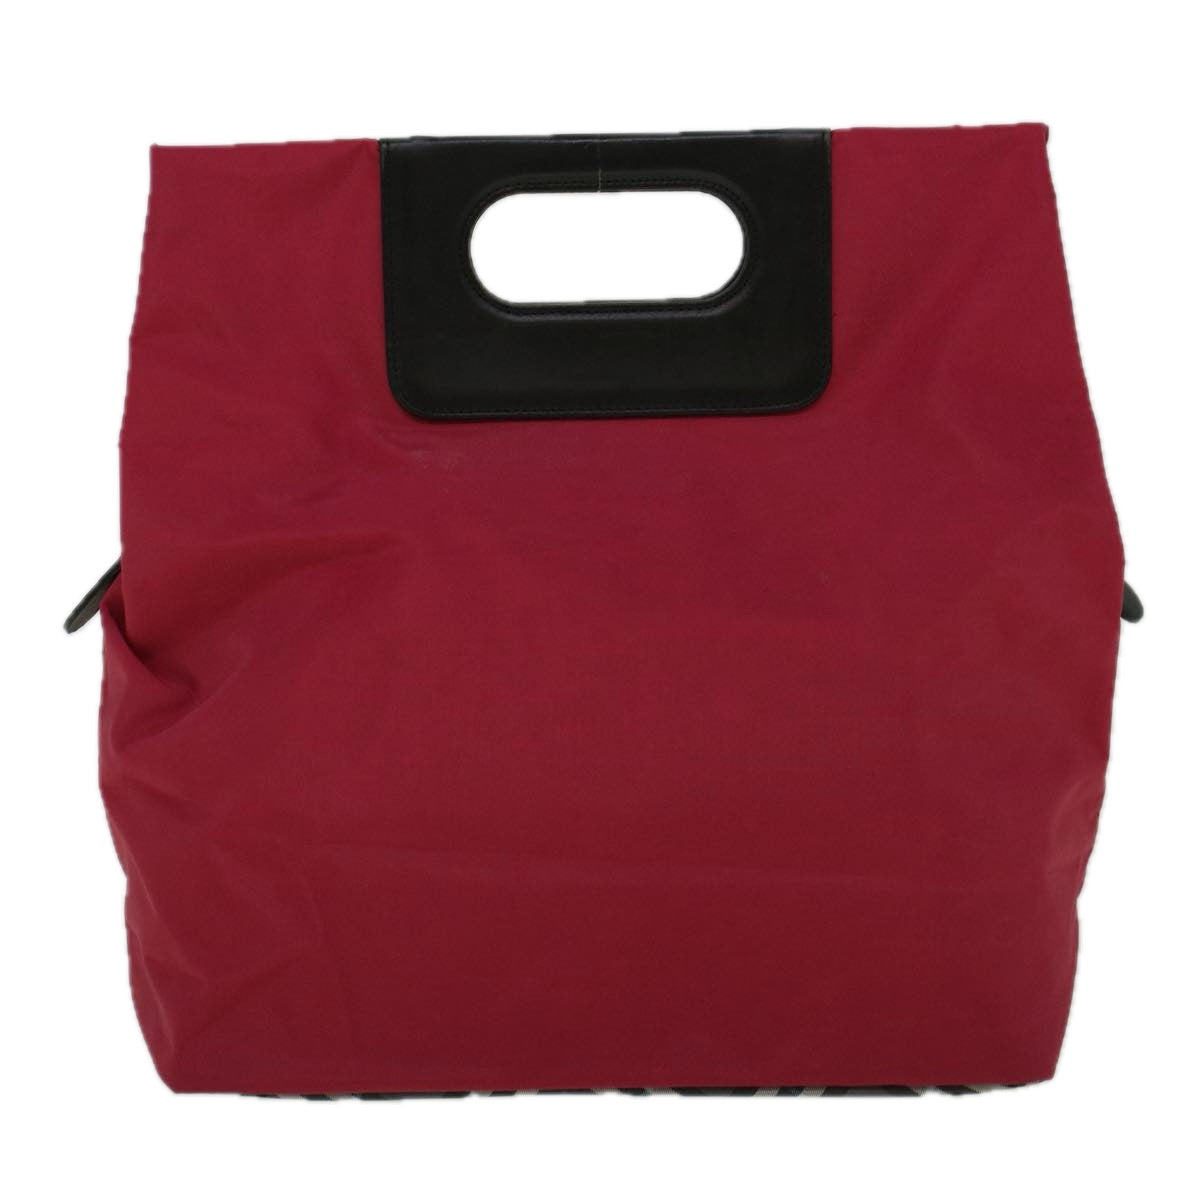 Burberrys Nova Check Blue Label Hand Bag Nylon Red Gray Auth bs8760 - 0